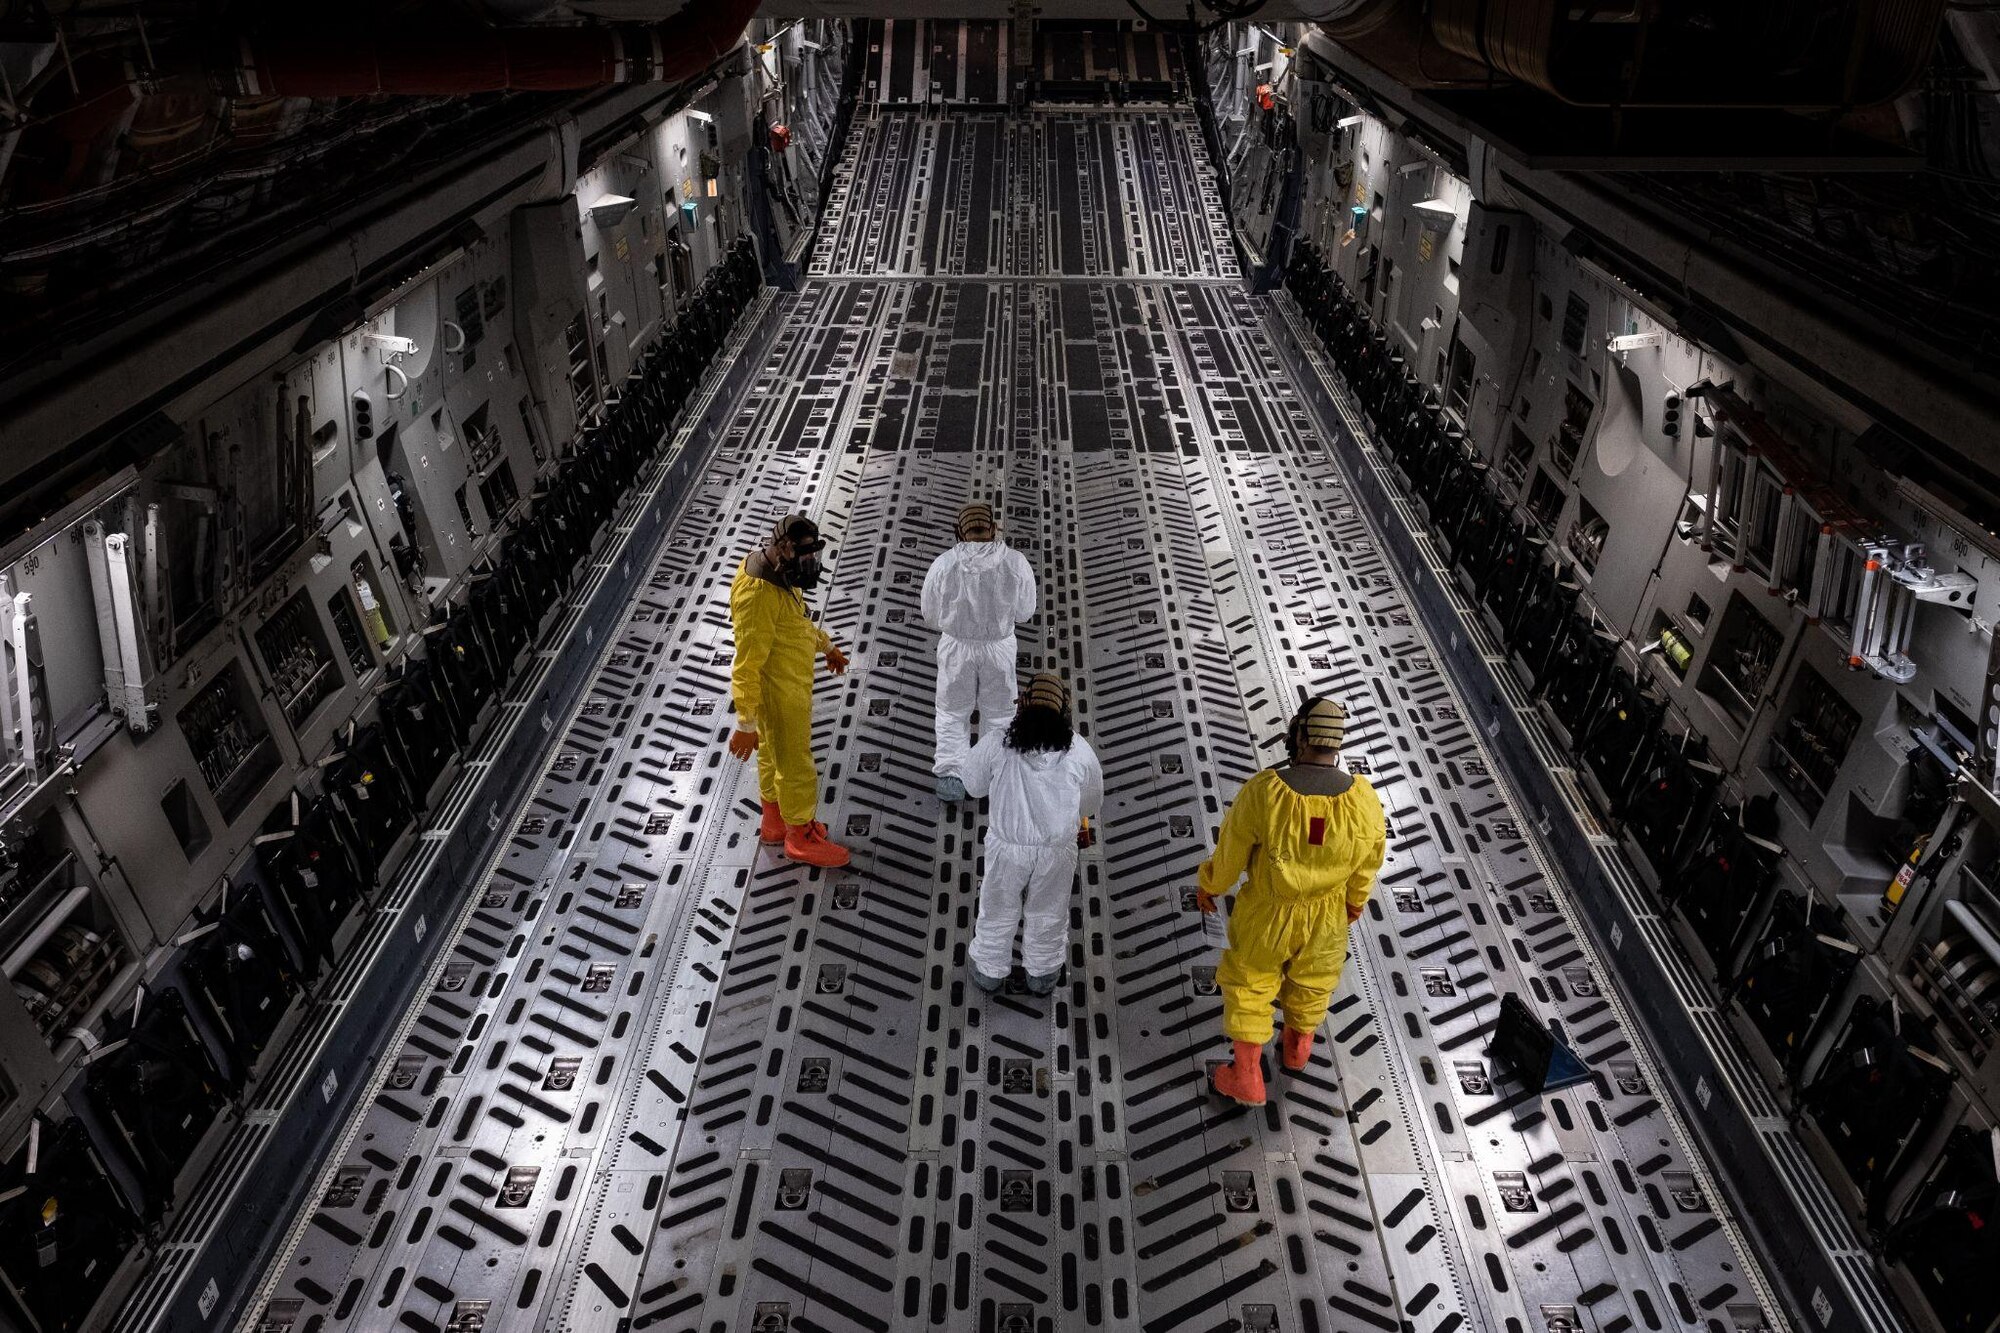 4 people walk down cargo bay